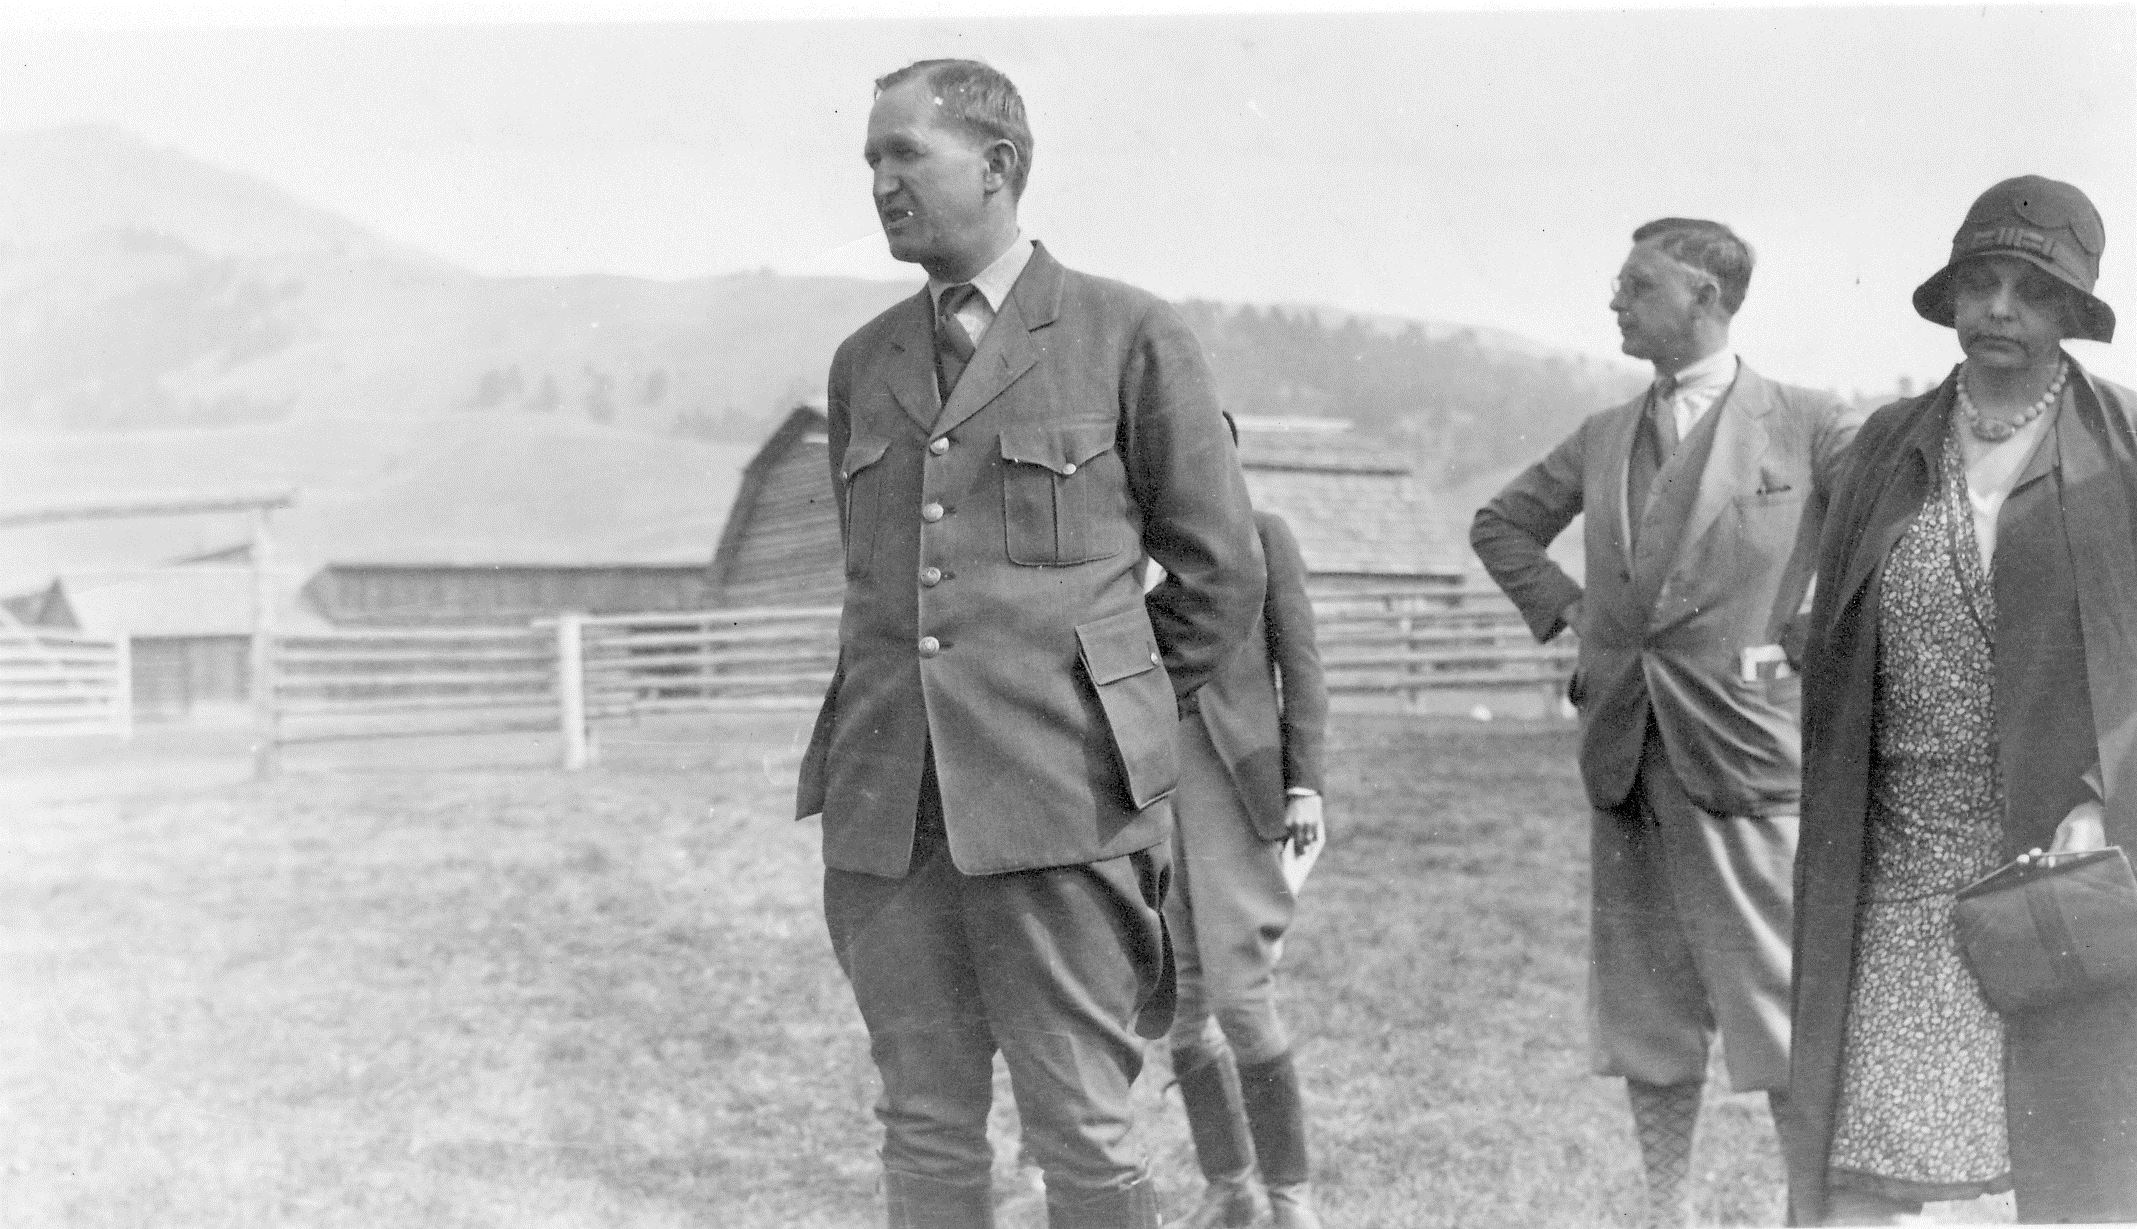 Horace Albright in Uniform